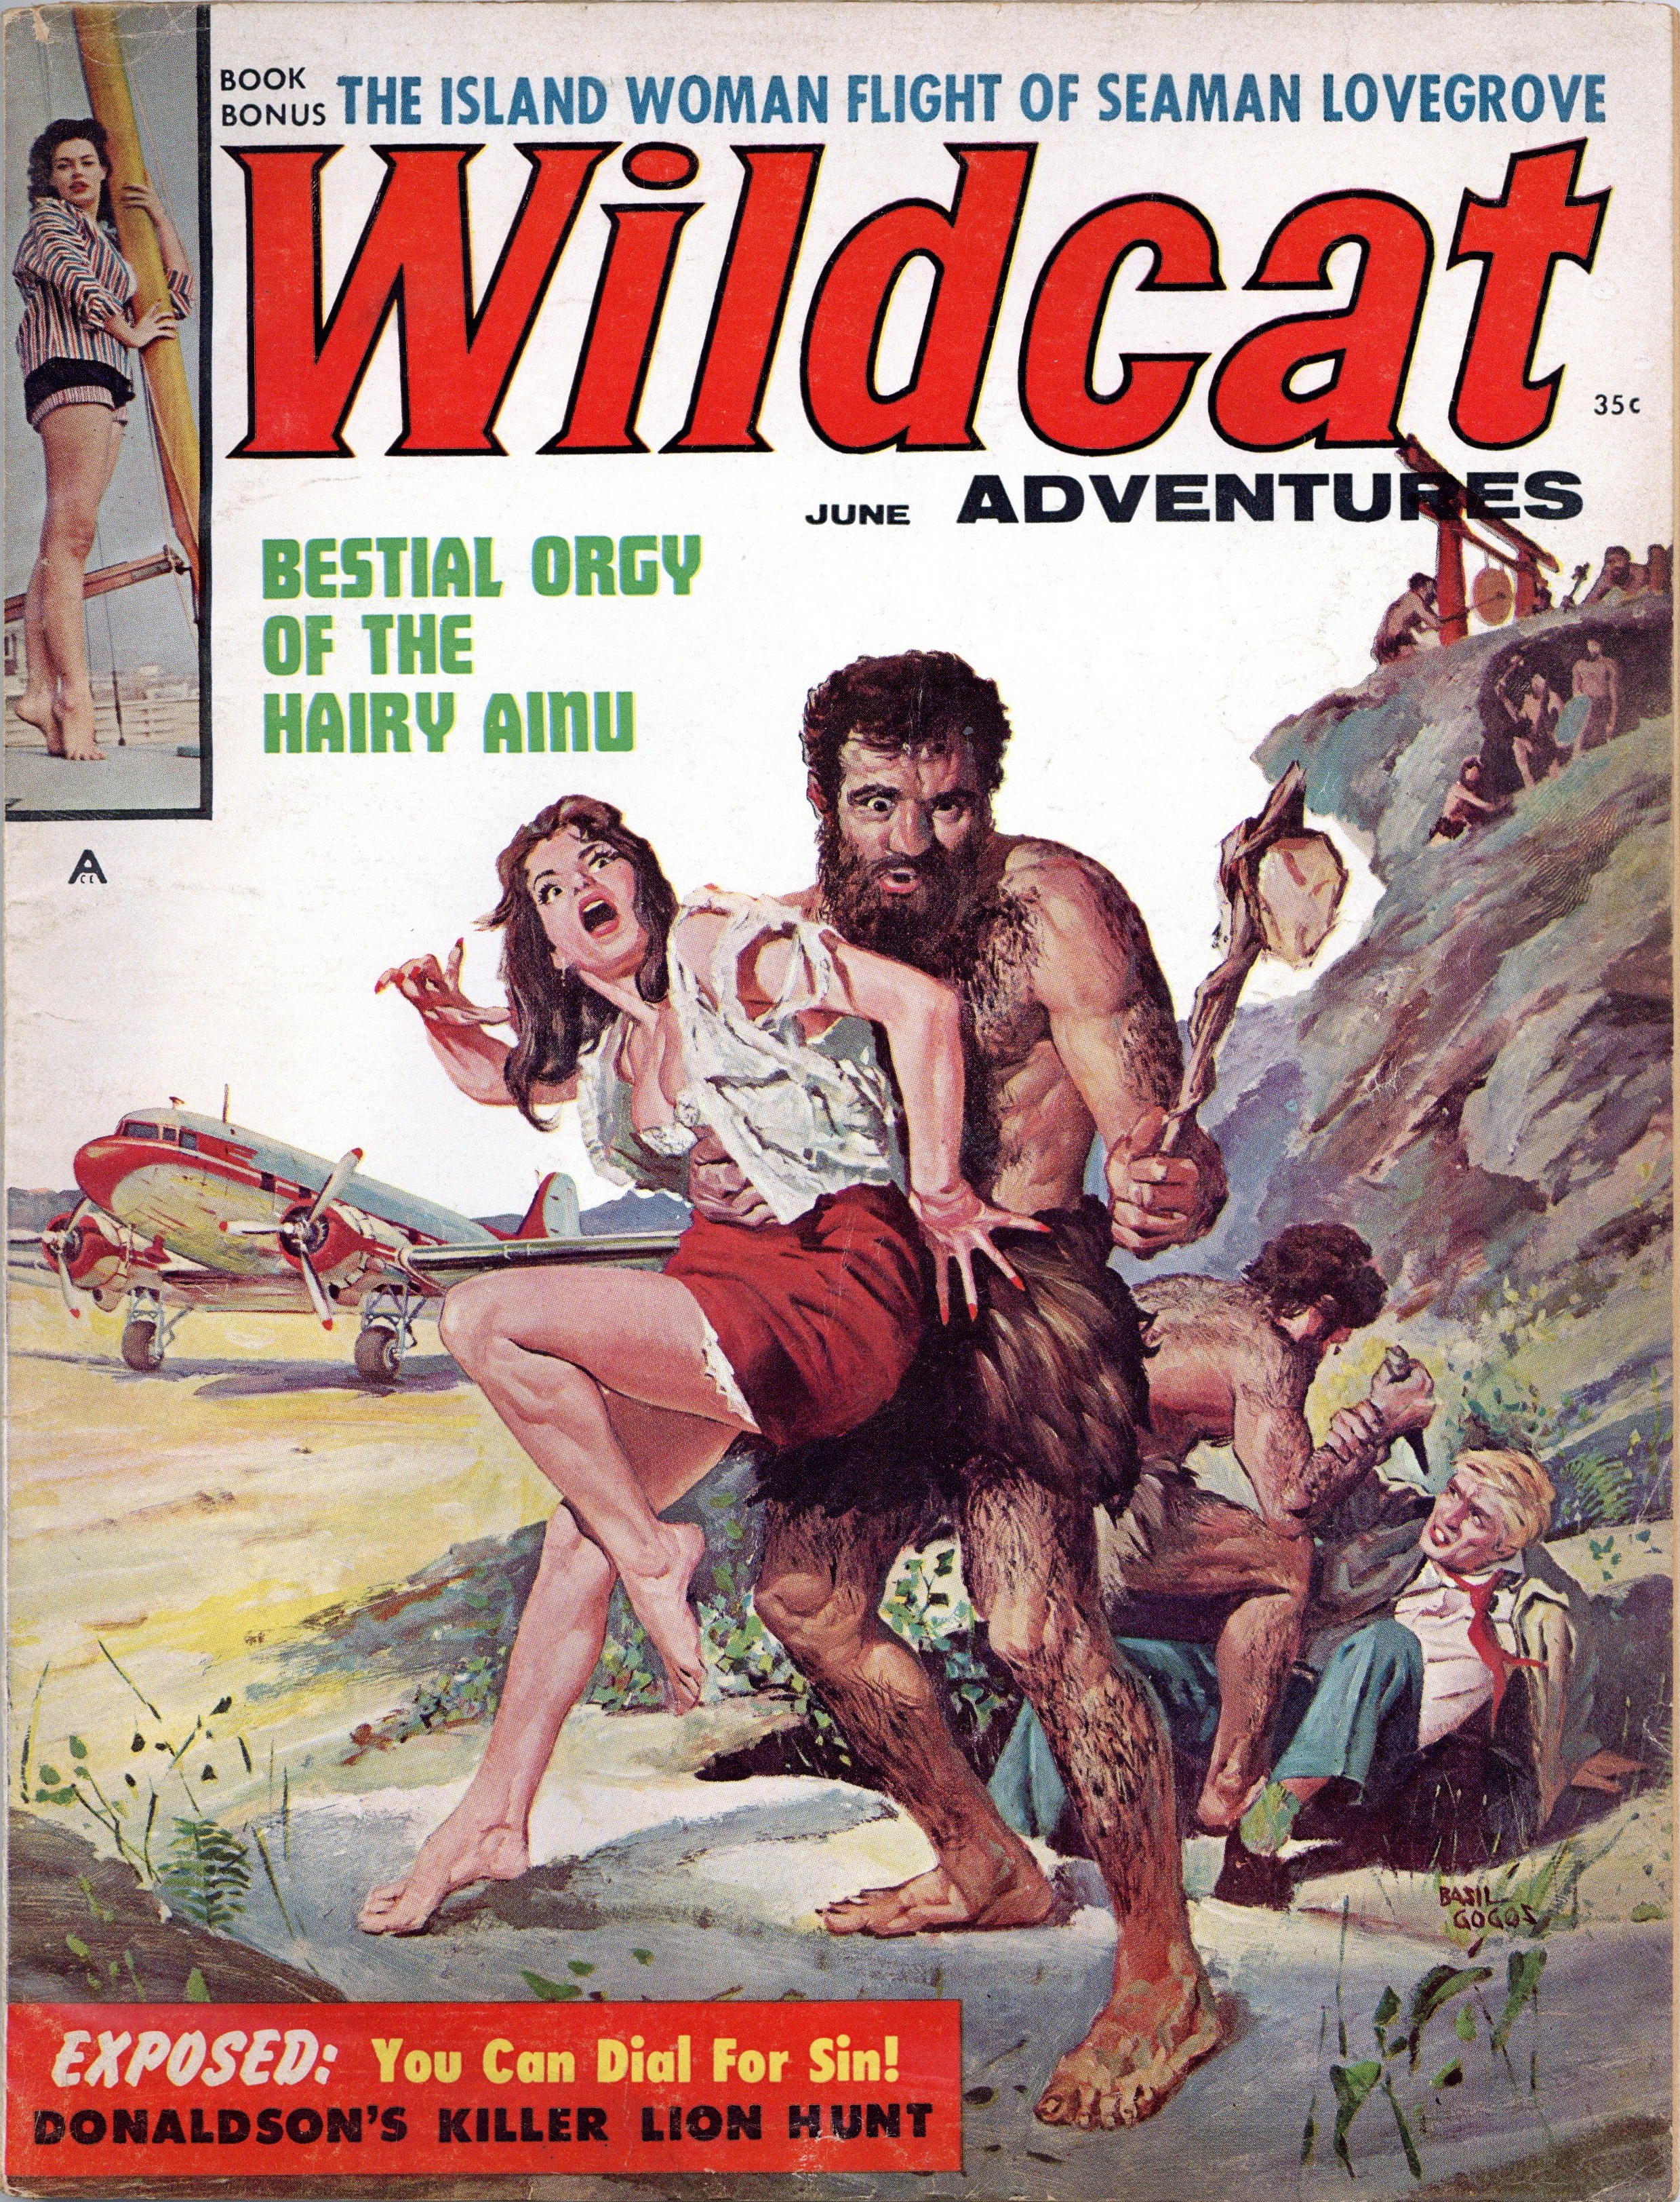 Adventures magazine. Wildcat Adventures журналы.